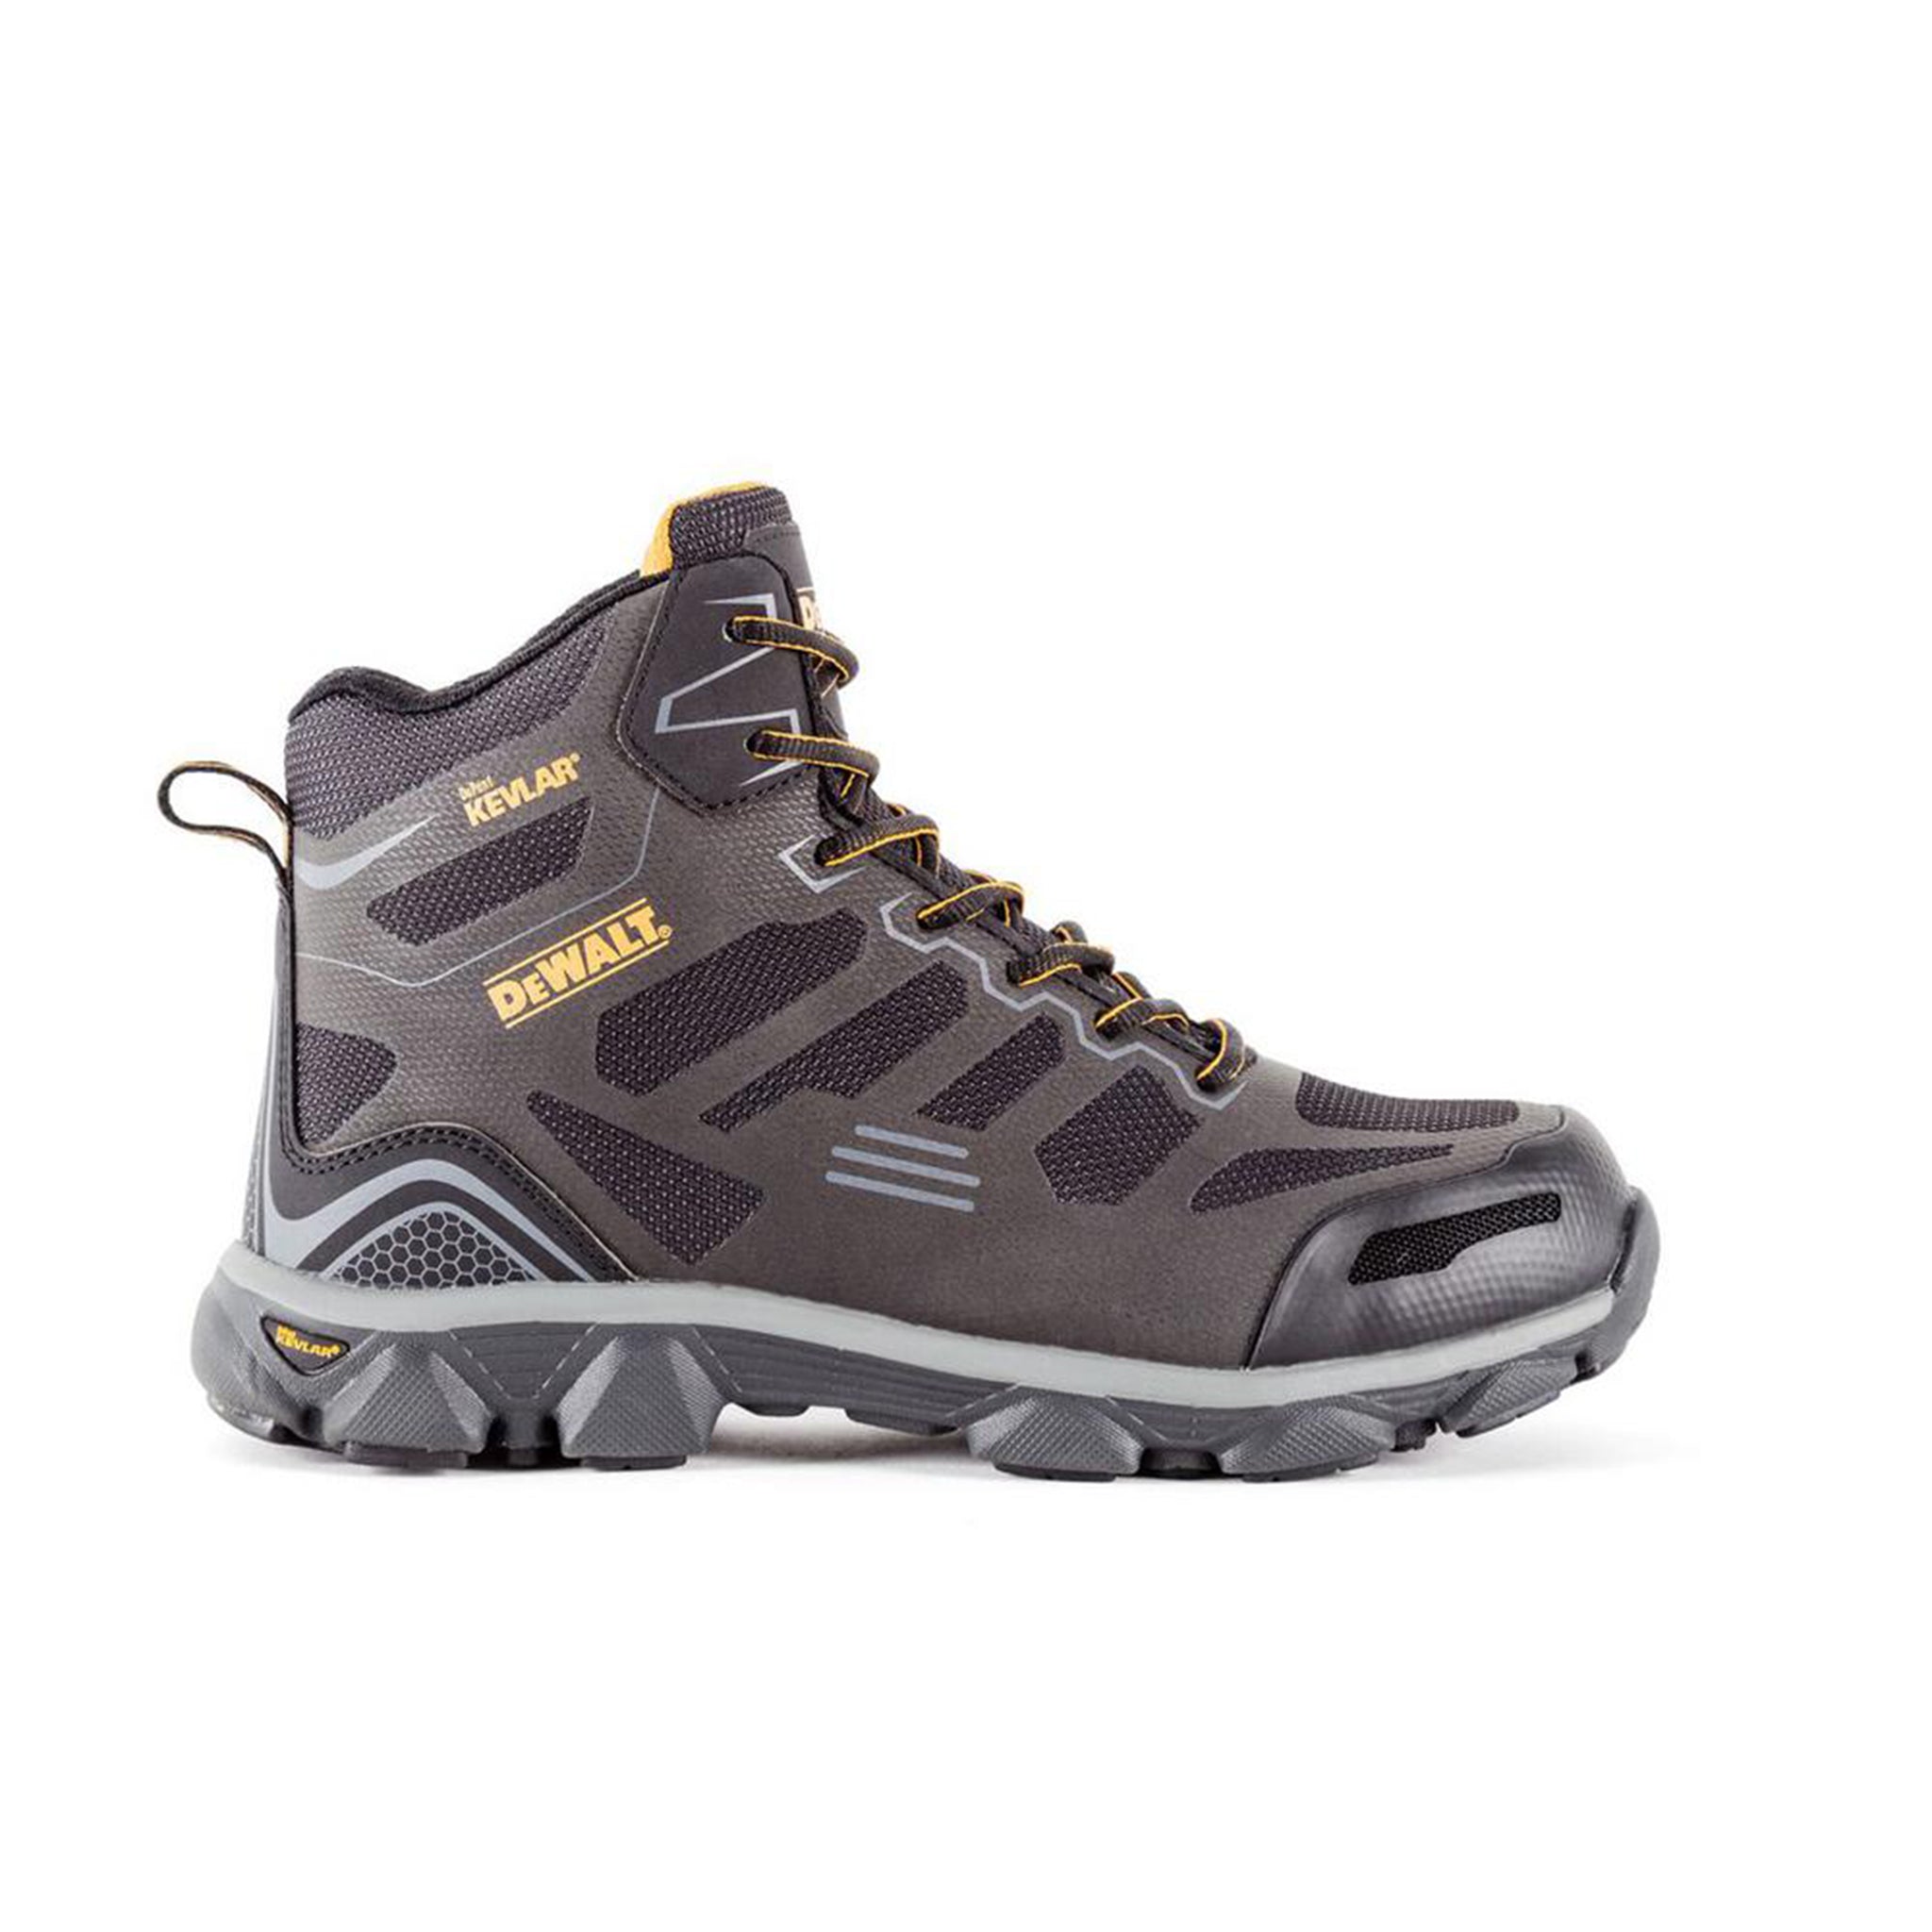 DEWALT Men's Crossfire Aluminum Toe ProLite Work Boots That Shoe Store and More